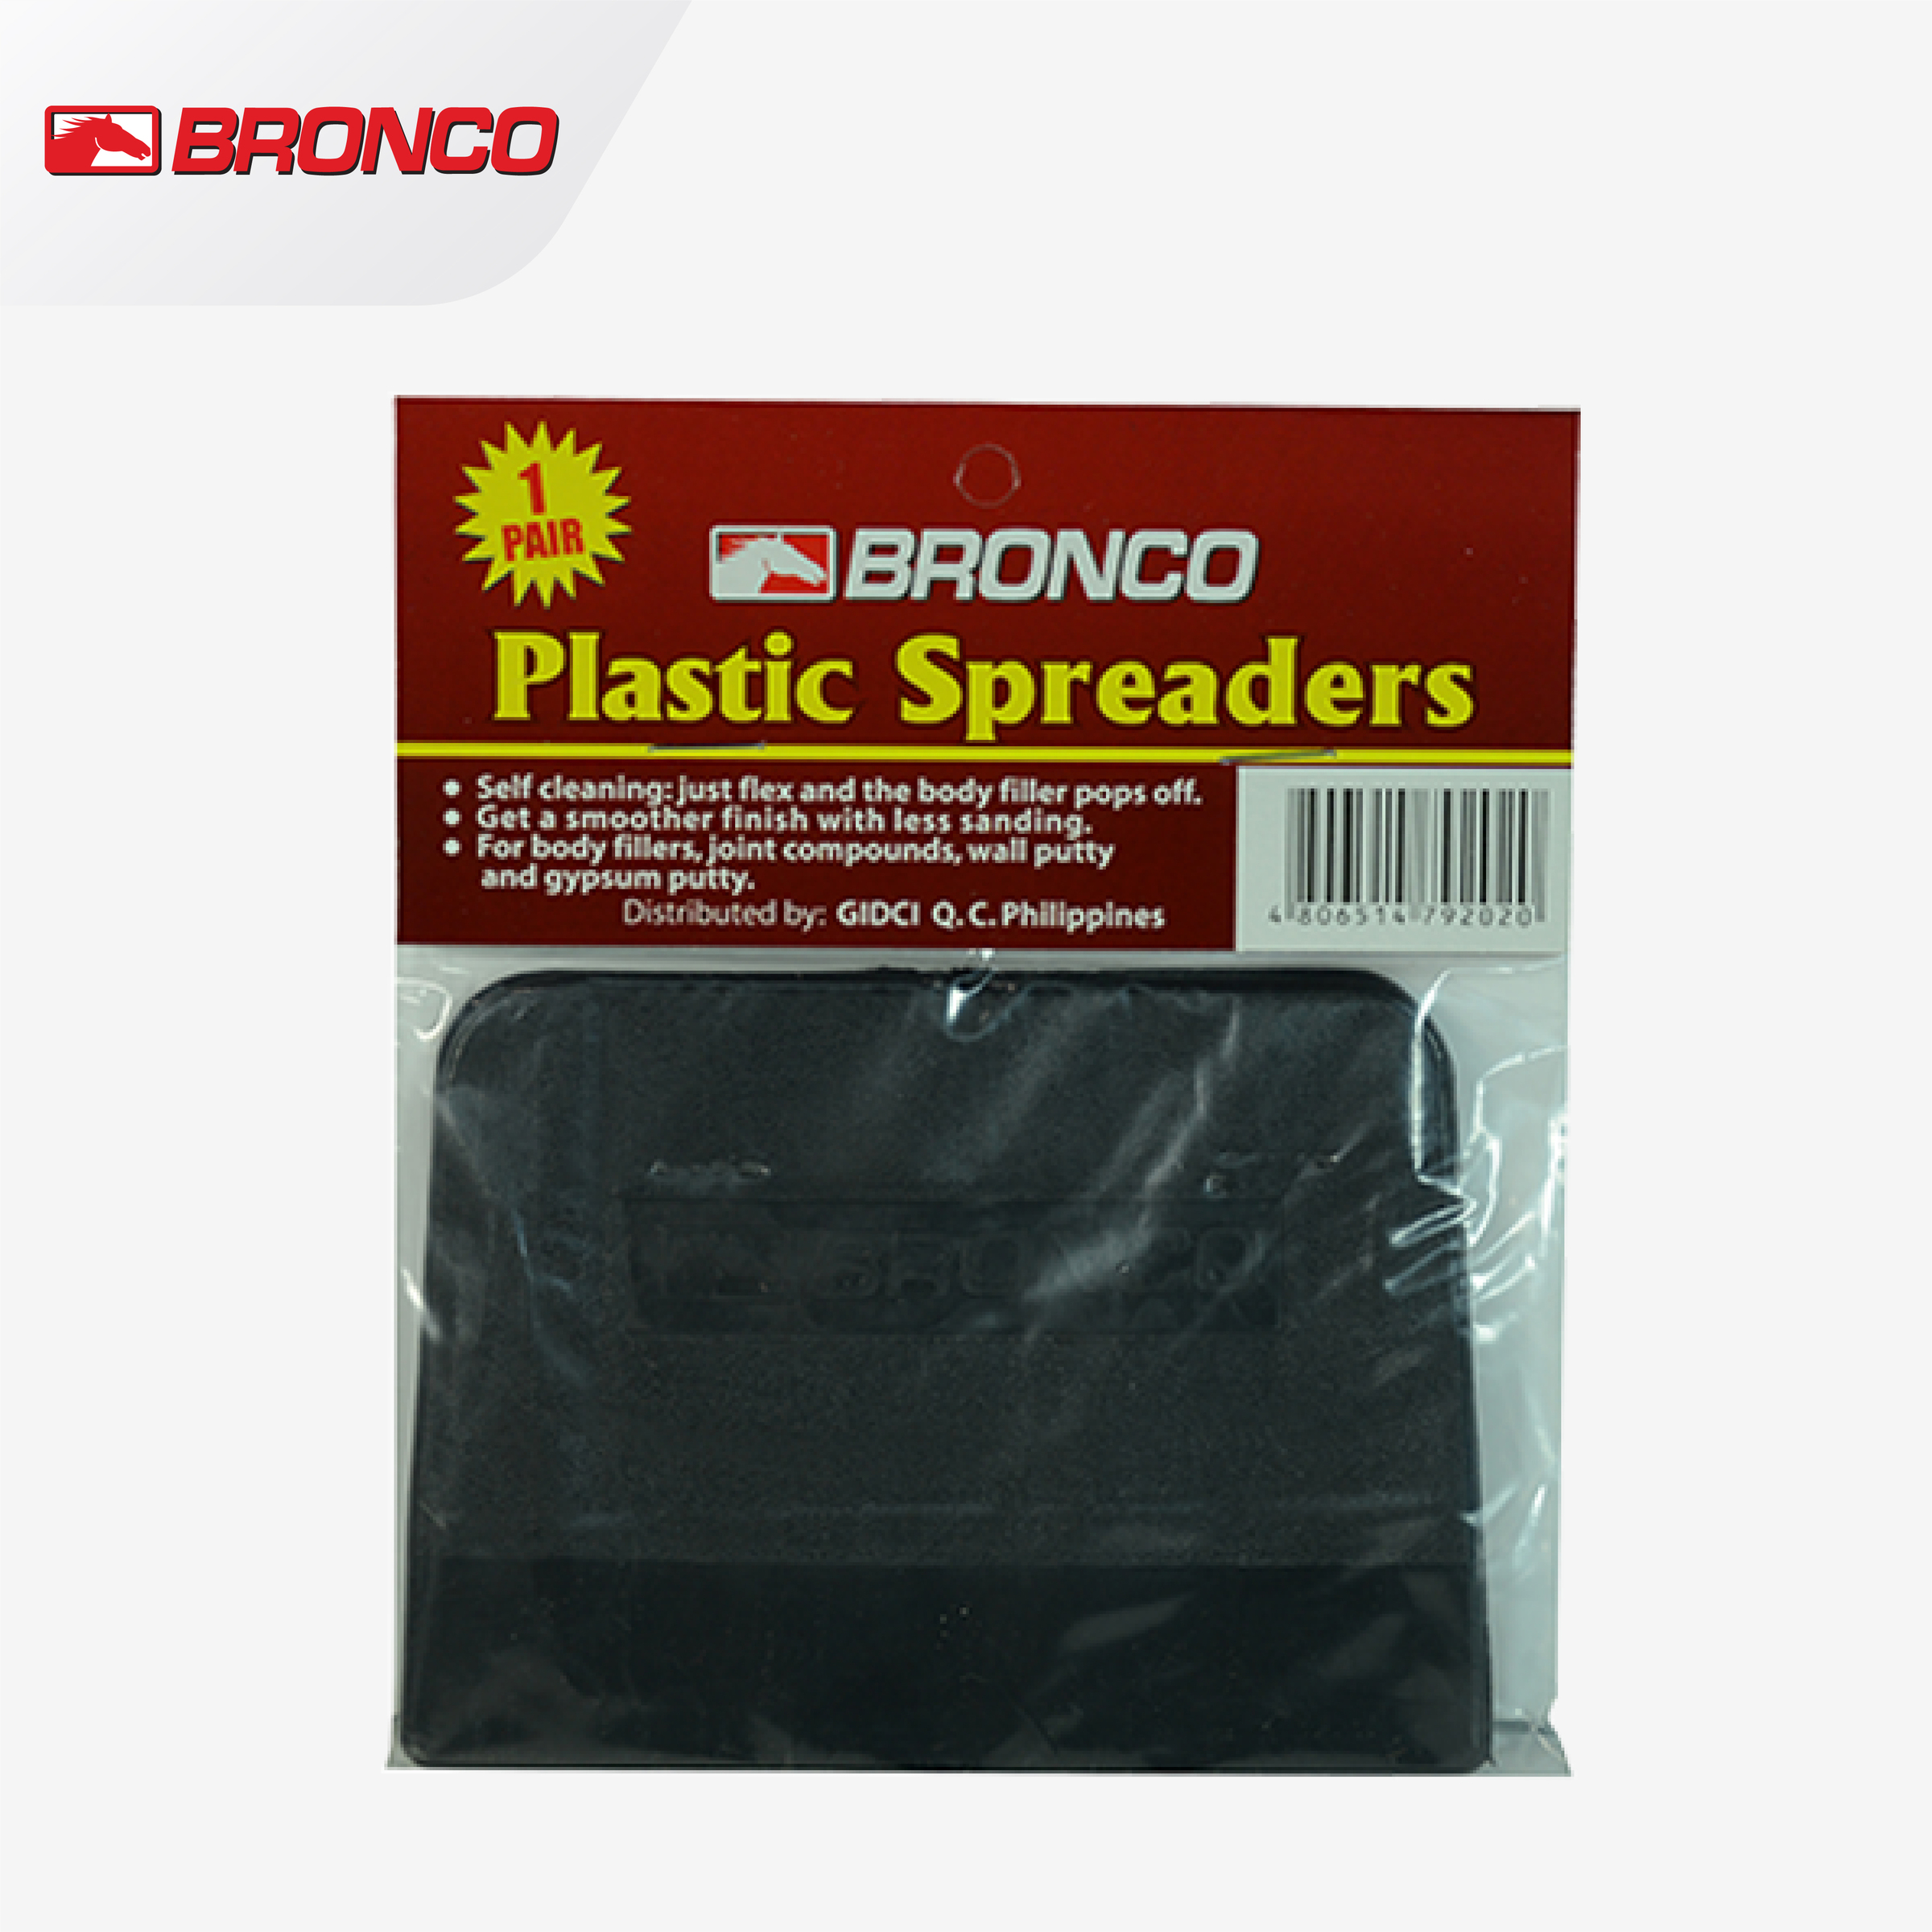 Bronco Plastic Spreaders